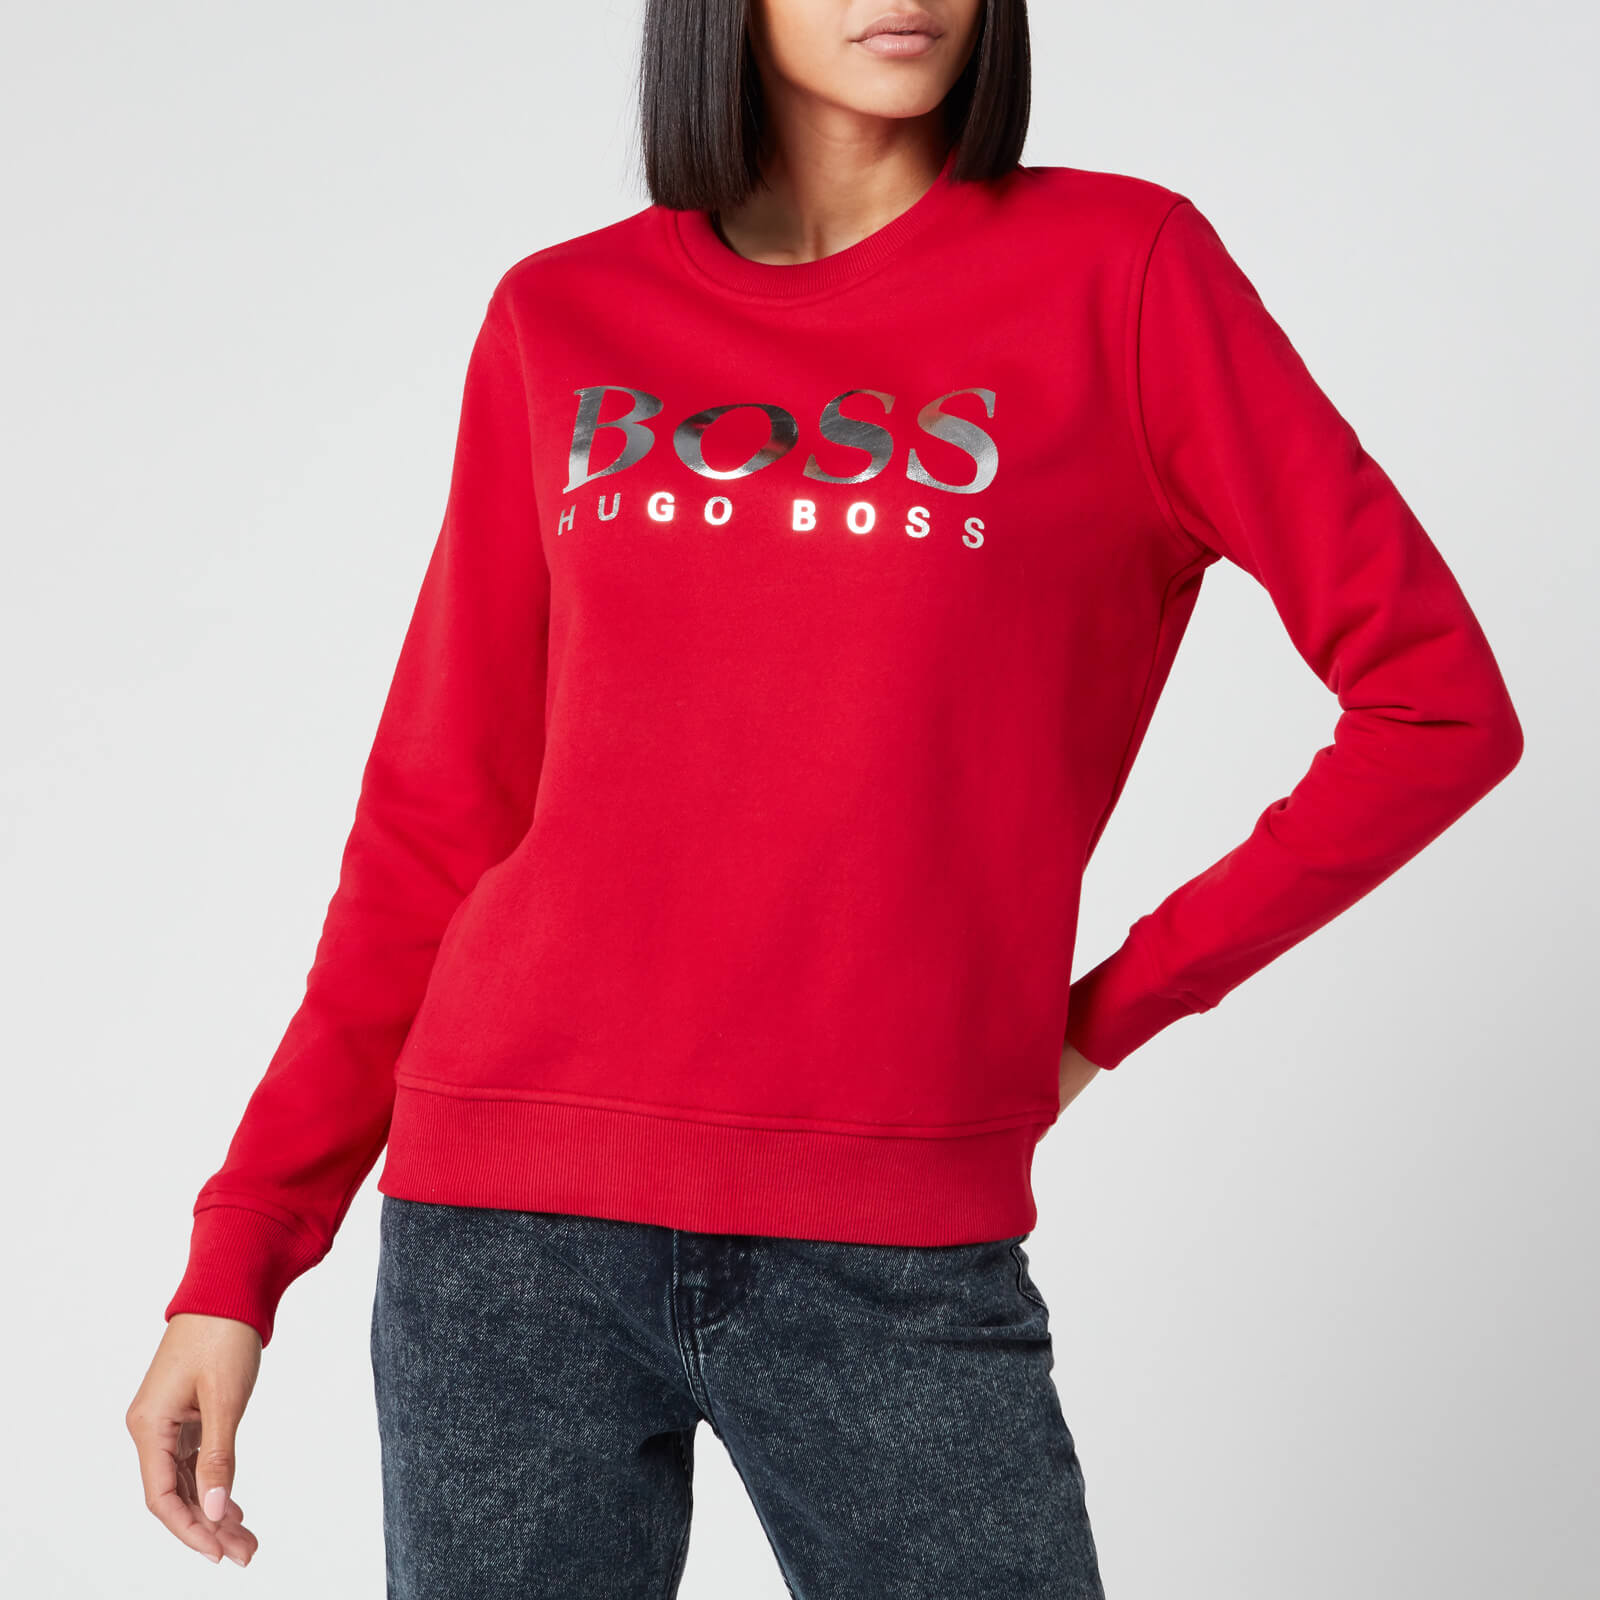 hugo boss women sweatshirt